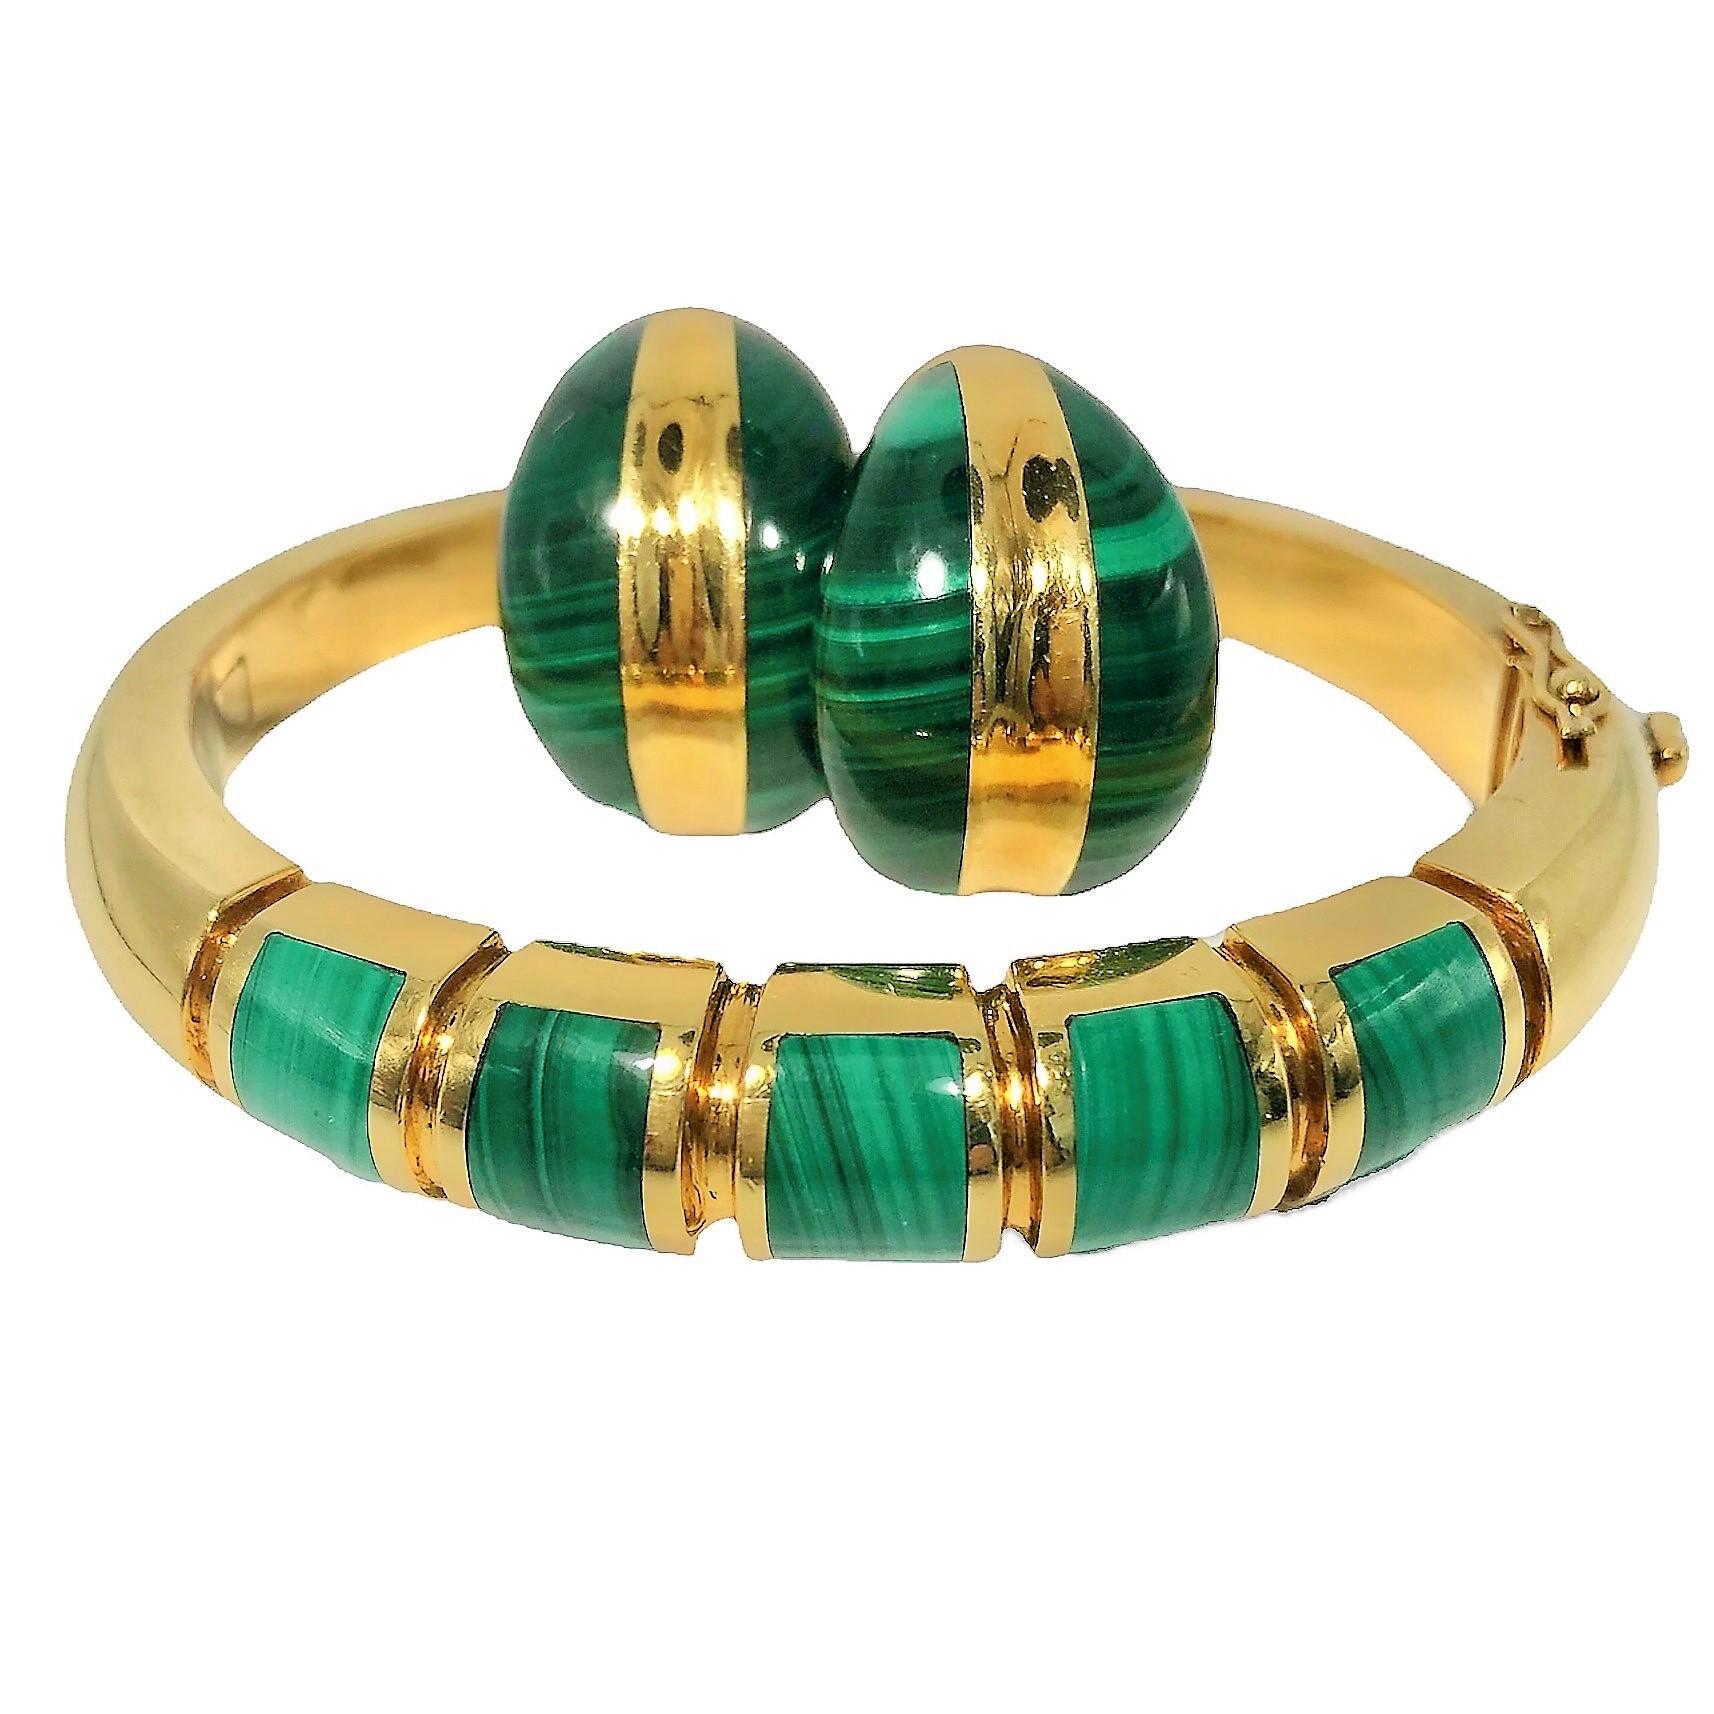 Modernist 18k Yellow Gold and Malachite Bangle Bracelet by Designer S'Paliu 5